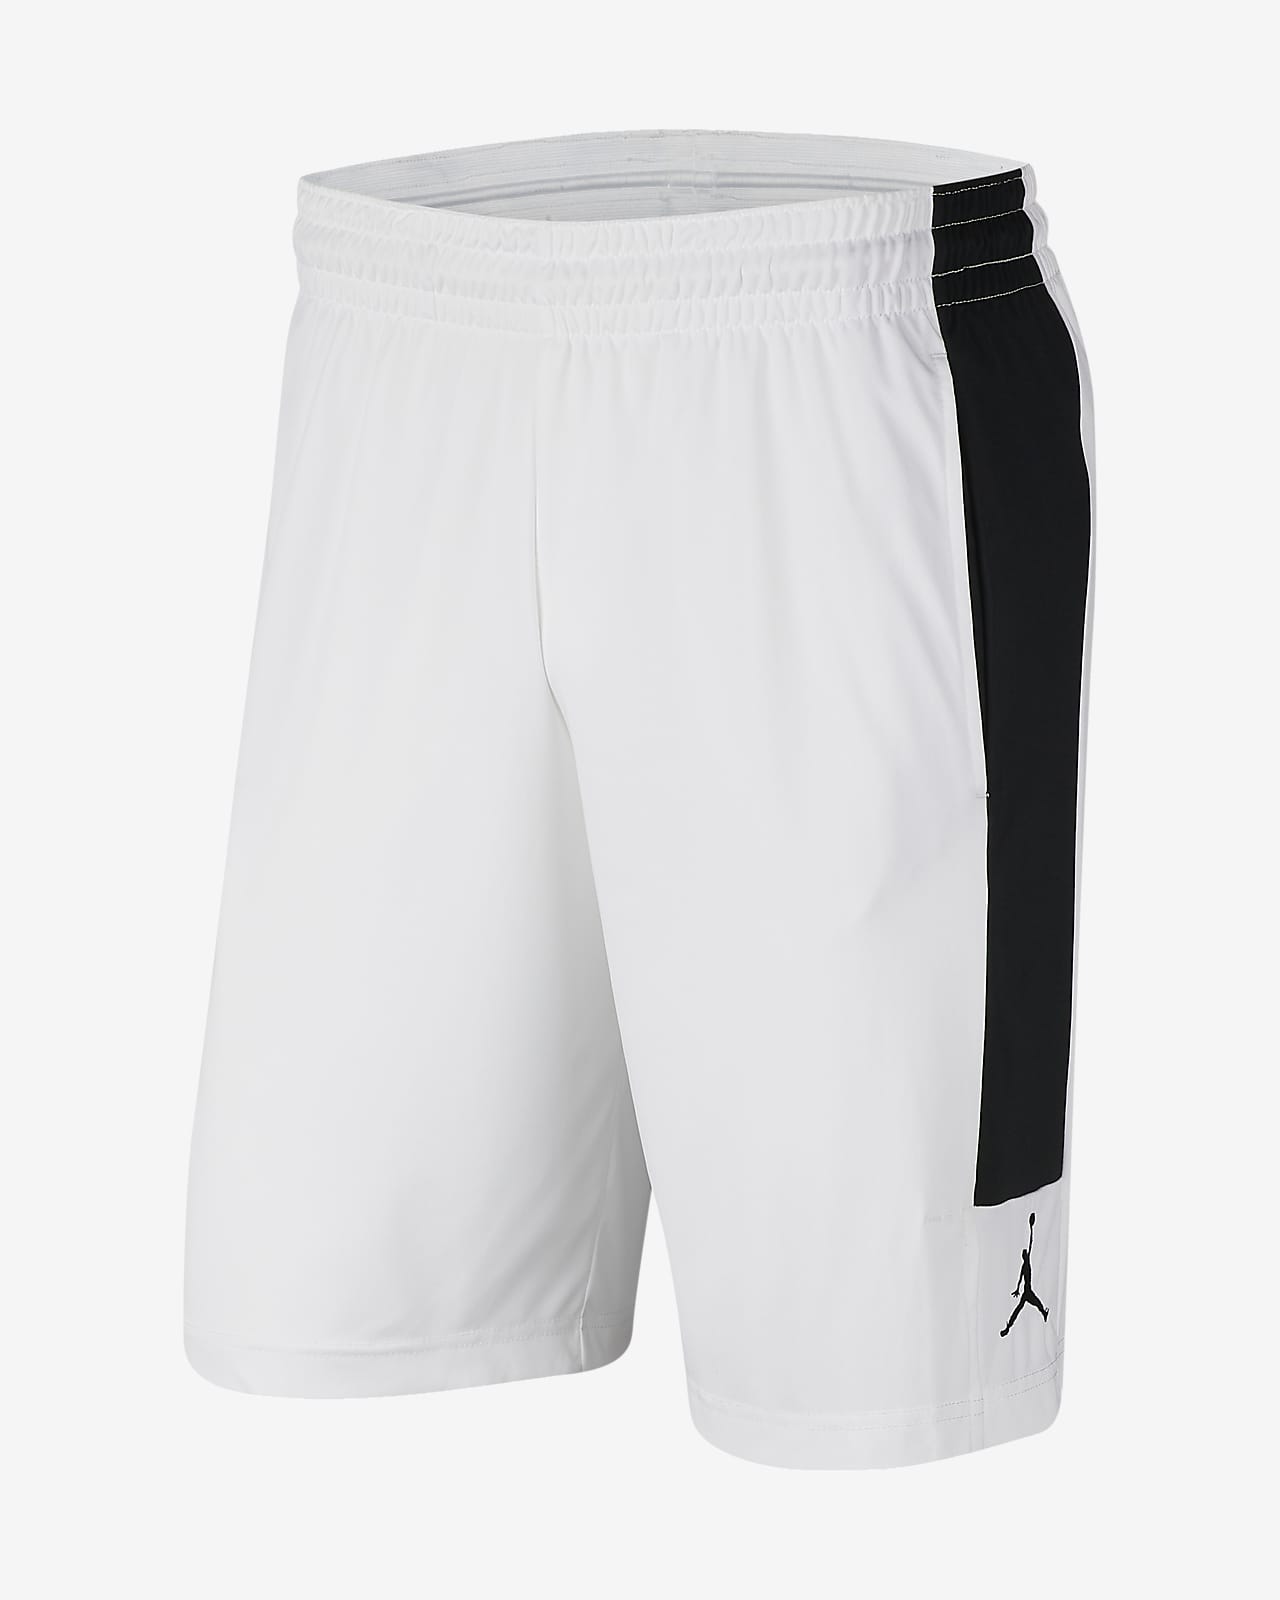 Buy > nike shorts jordan > in stock